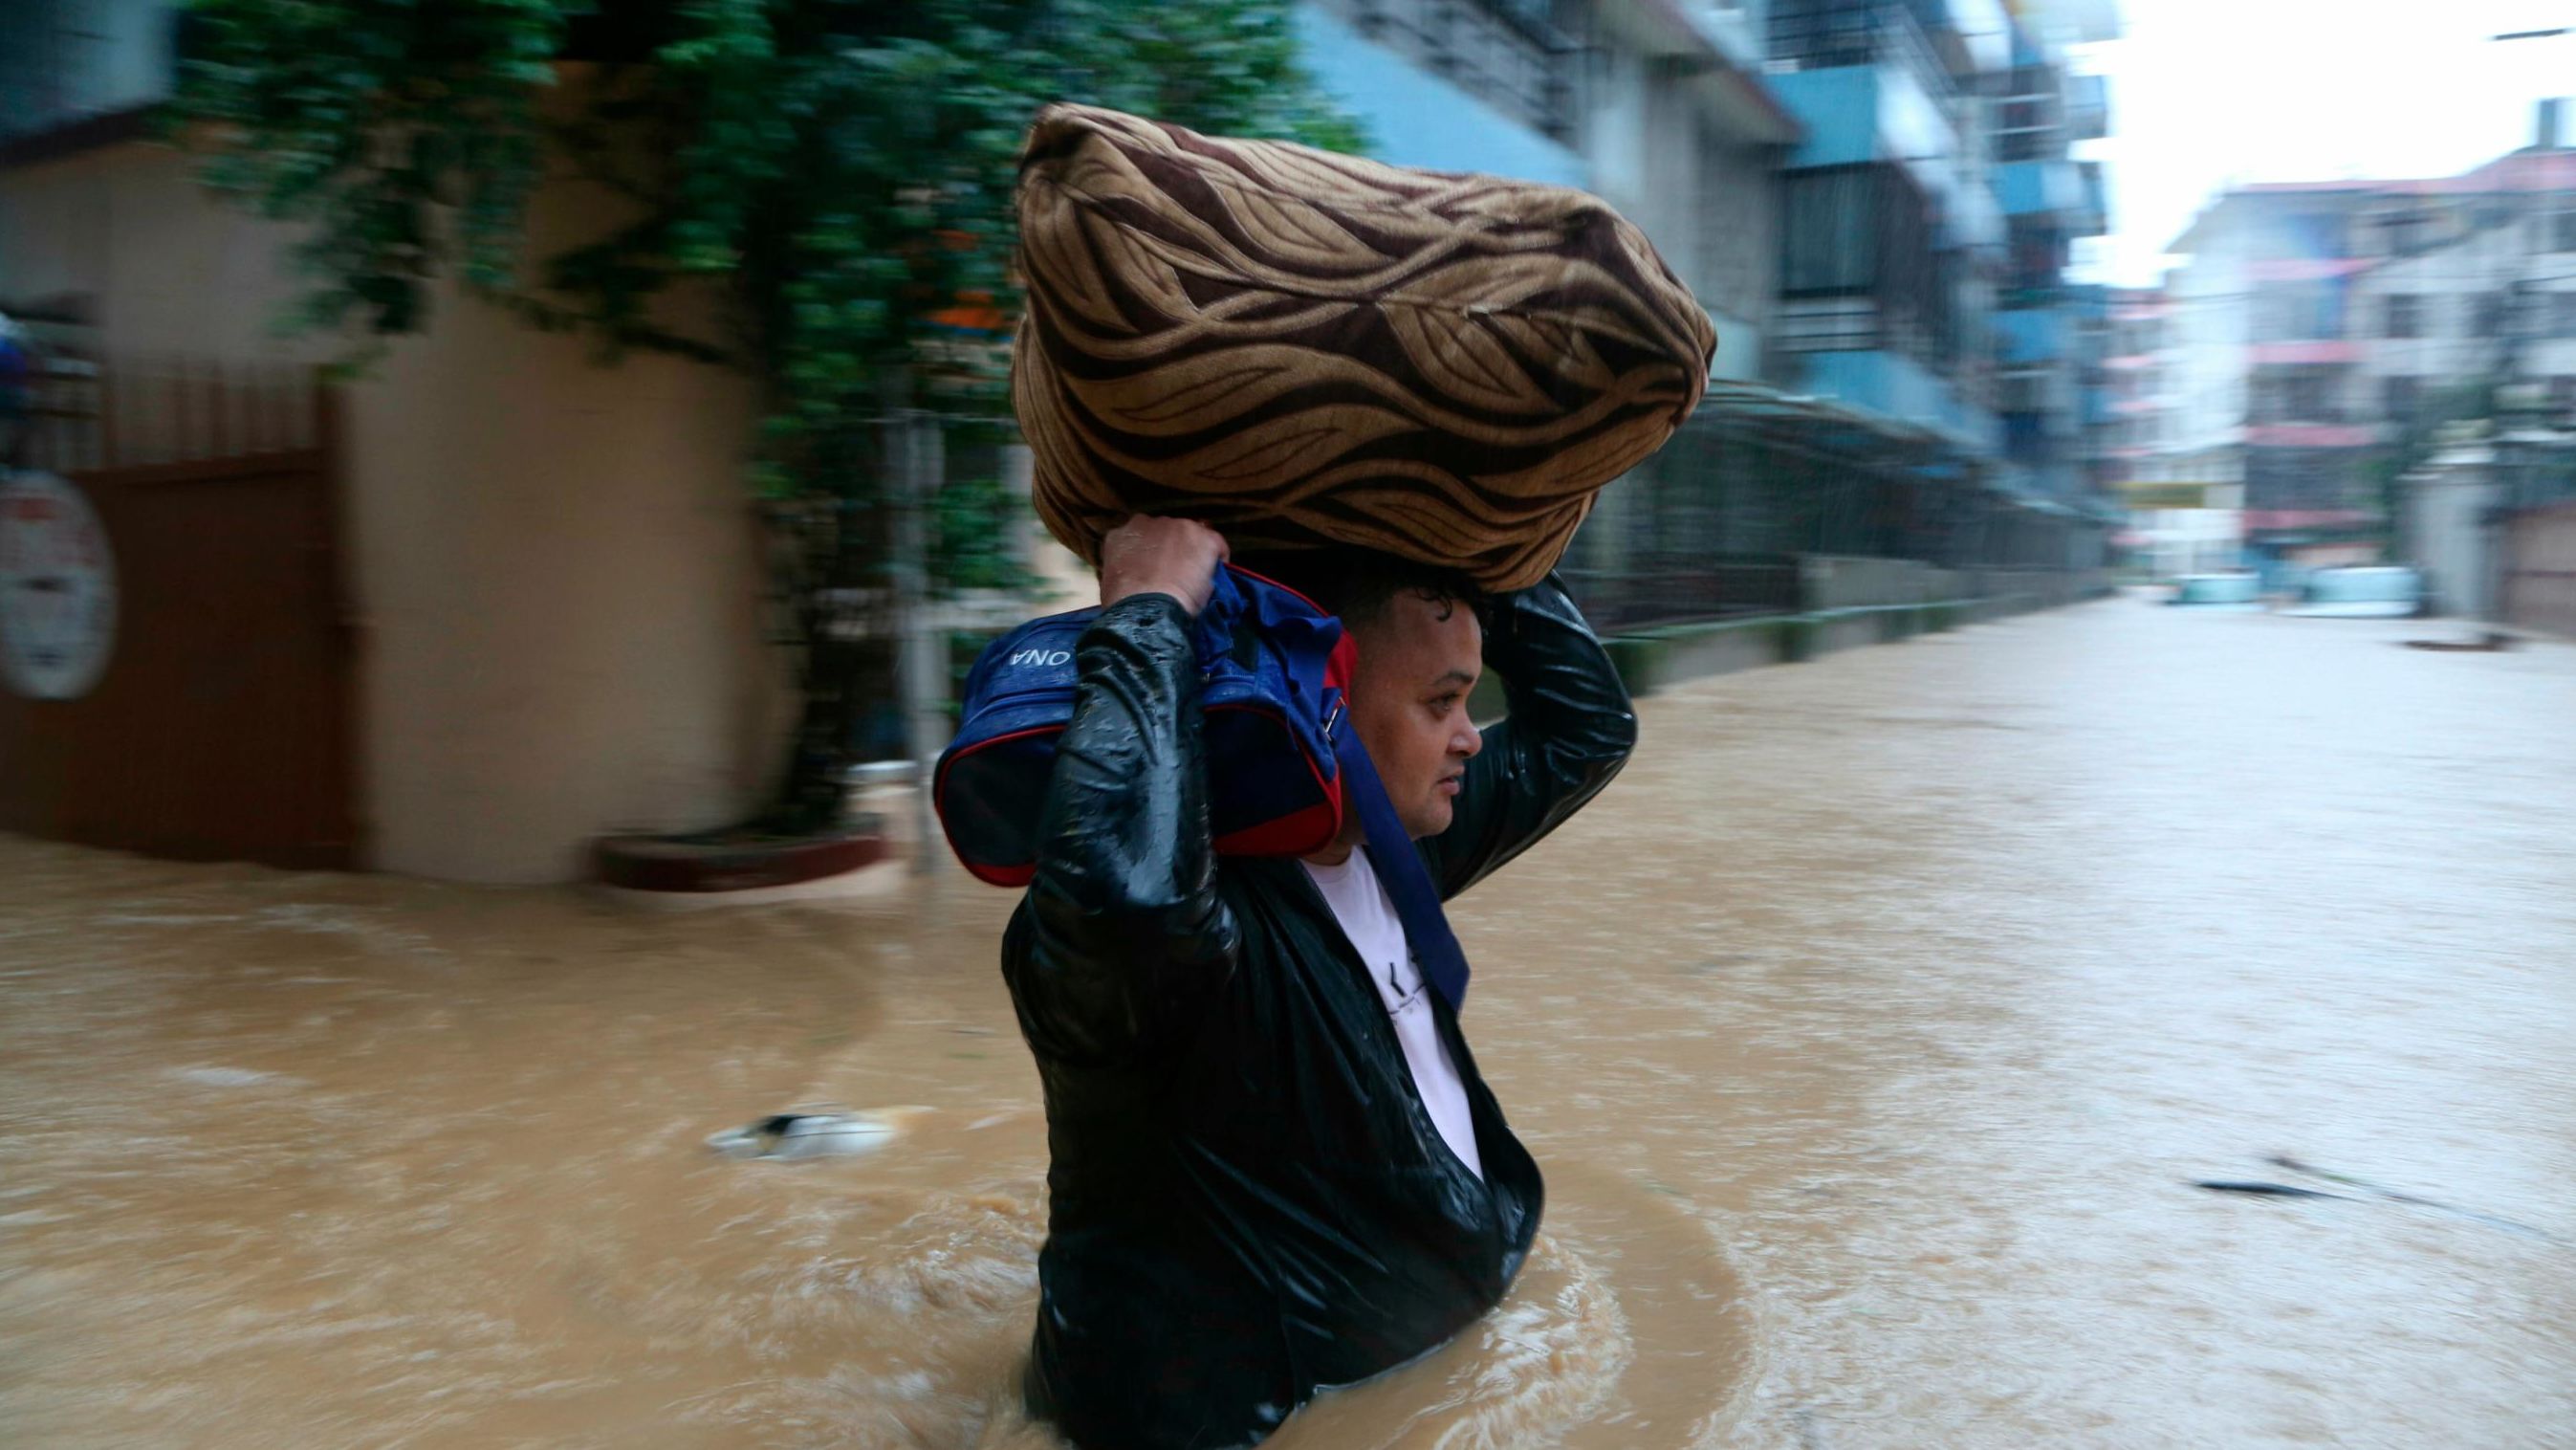 A Nepalese man wades through a flooded street in Kathmandu, Nepal, on July 12, 2019.